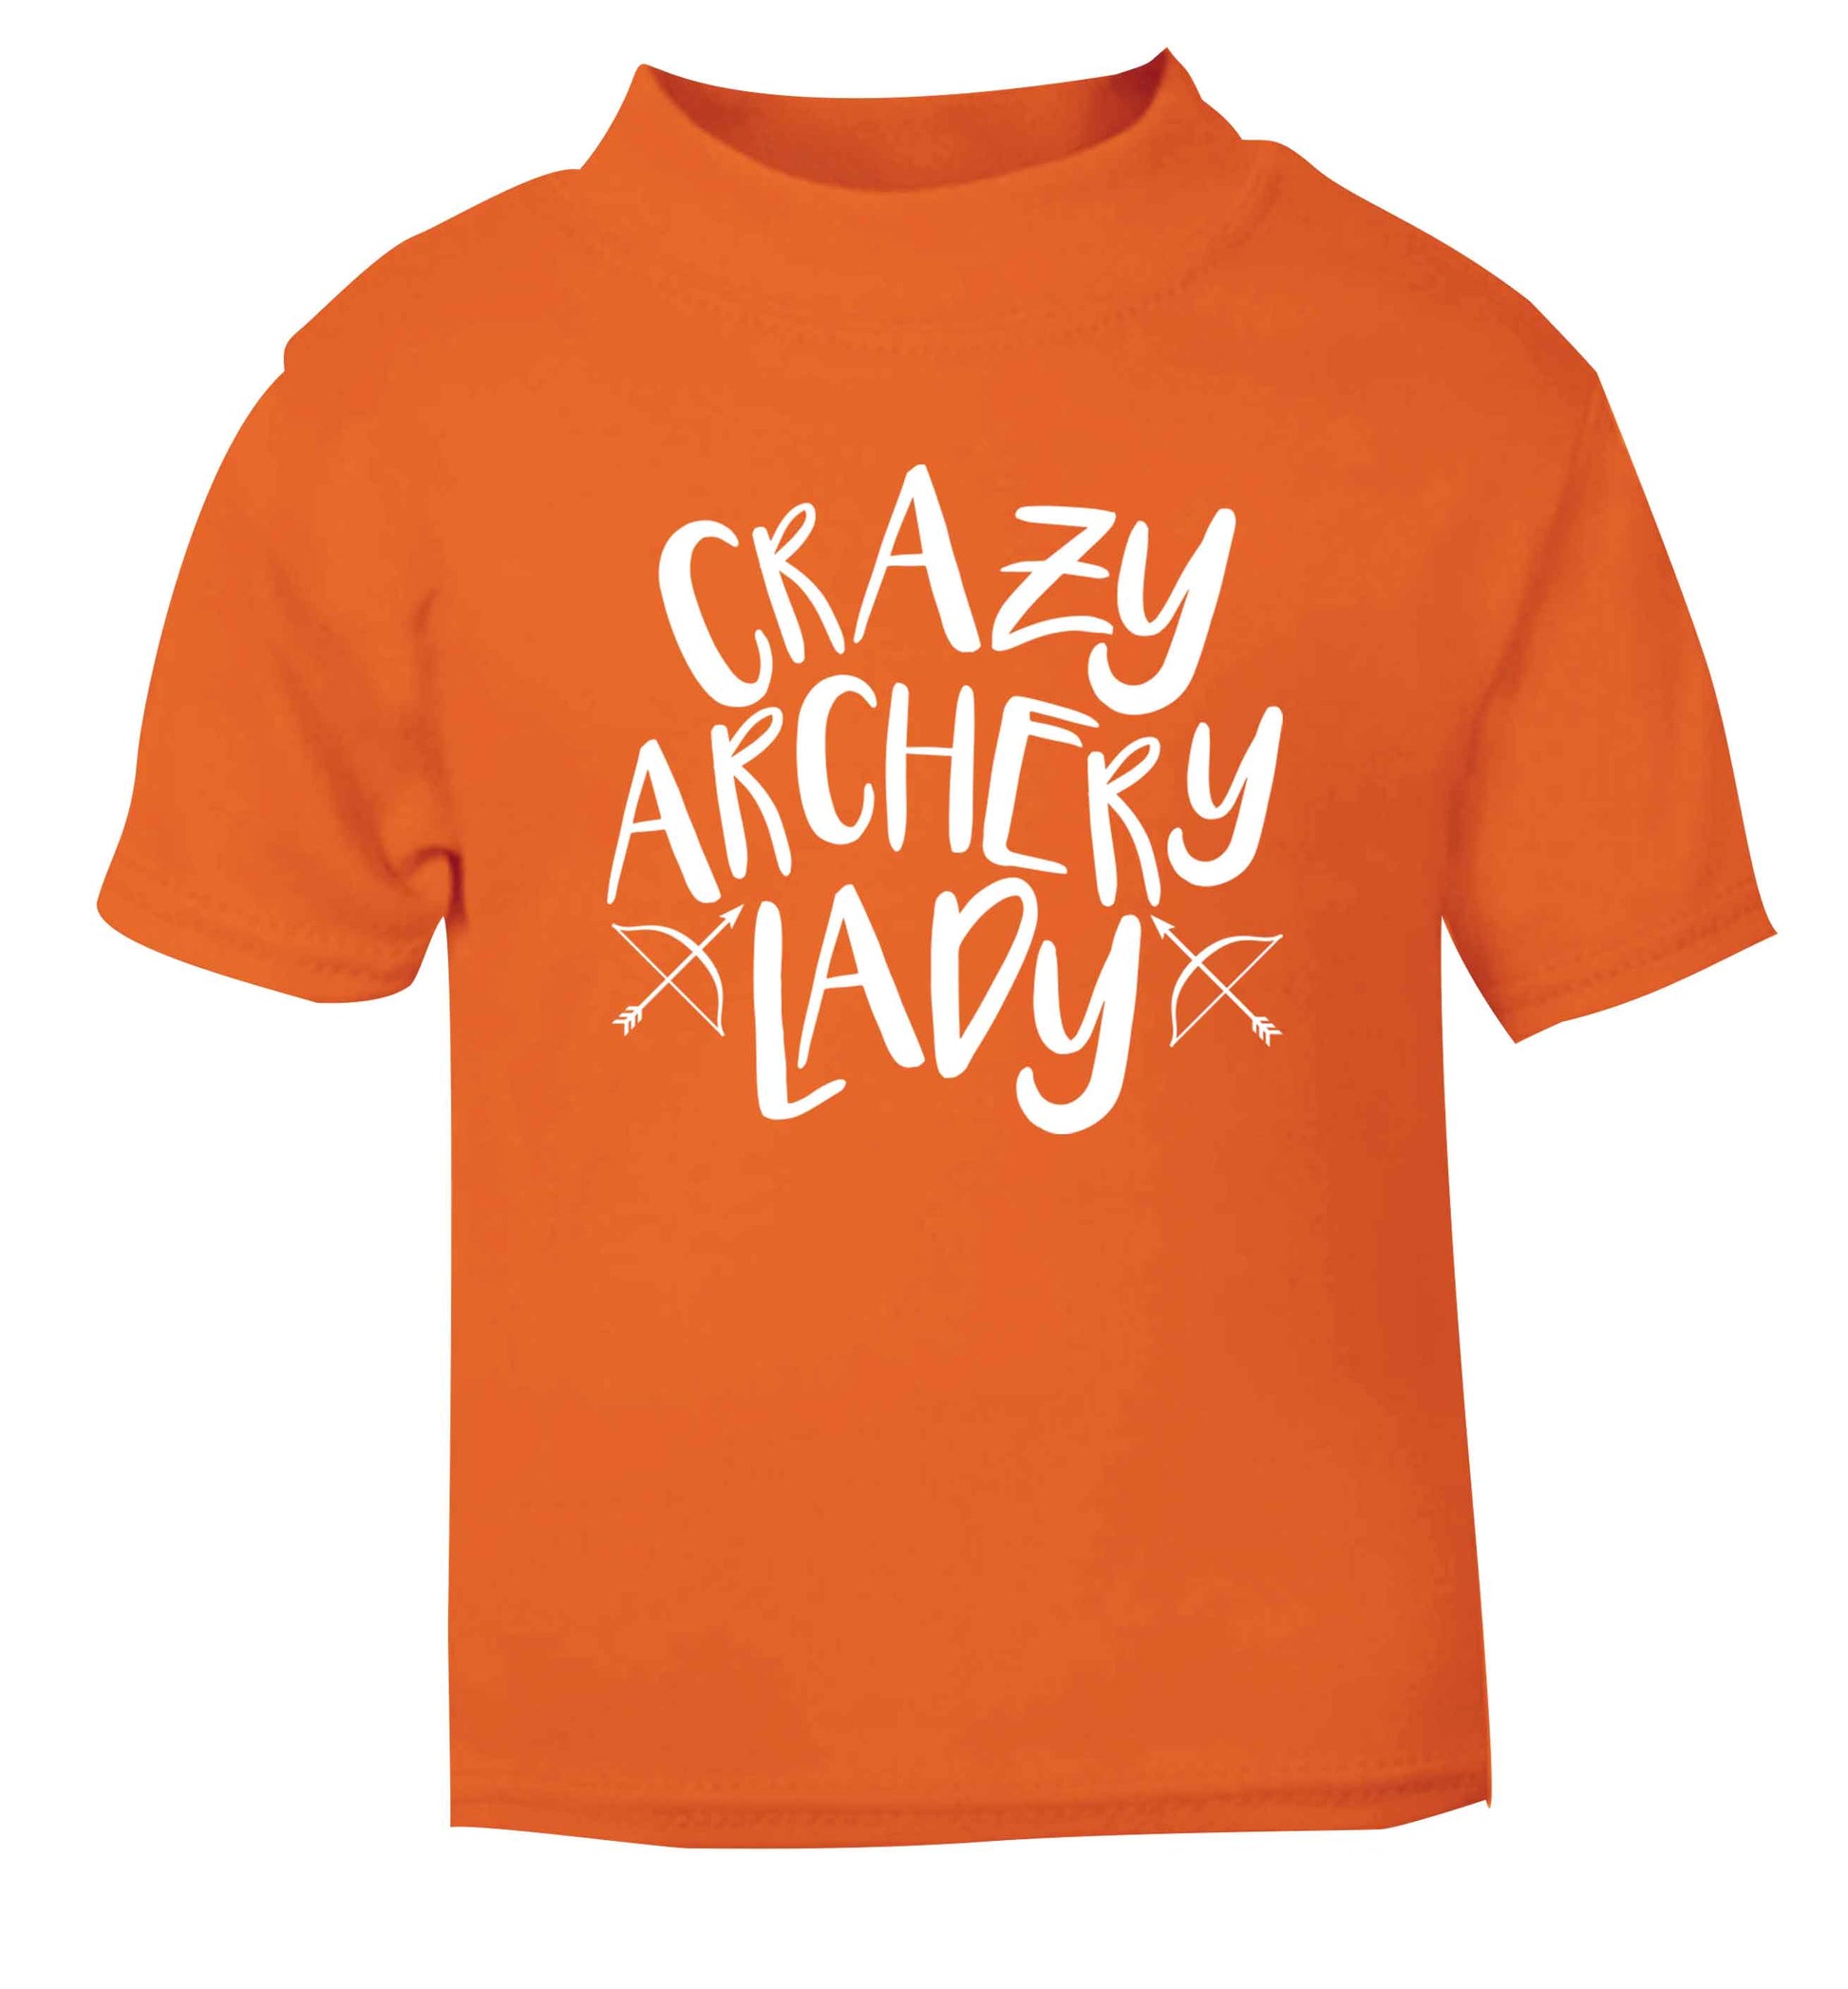 Crazy archery lady orange Baby Toddler Tshirt 2 Years